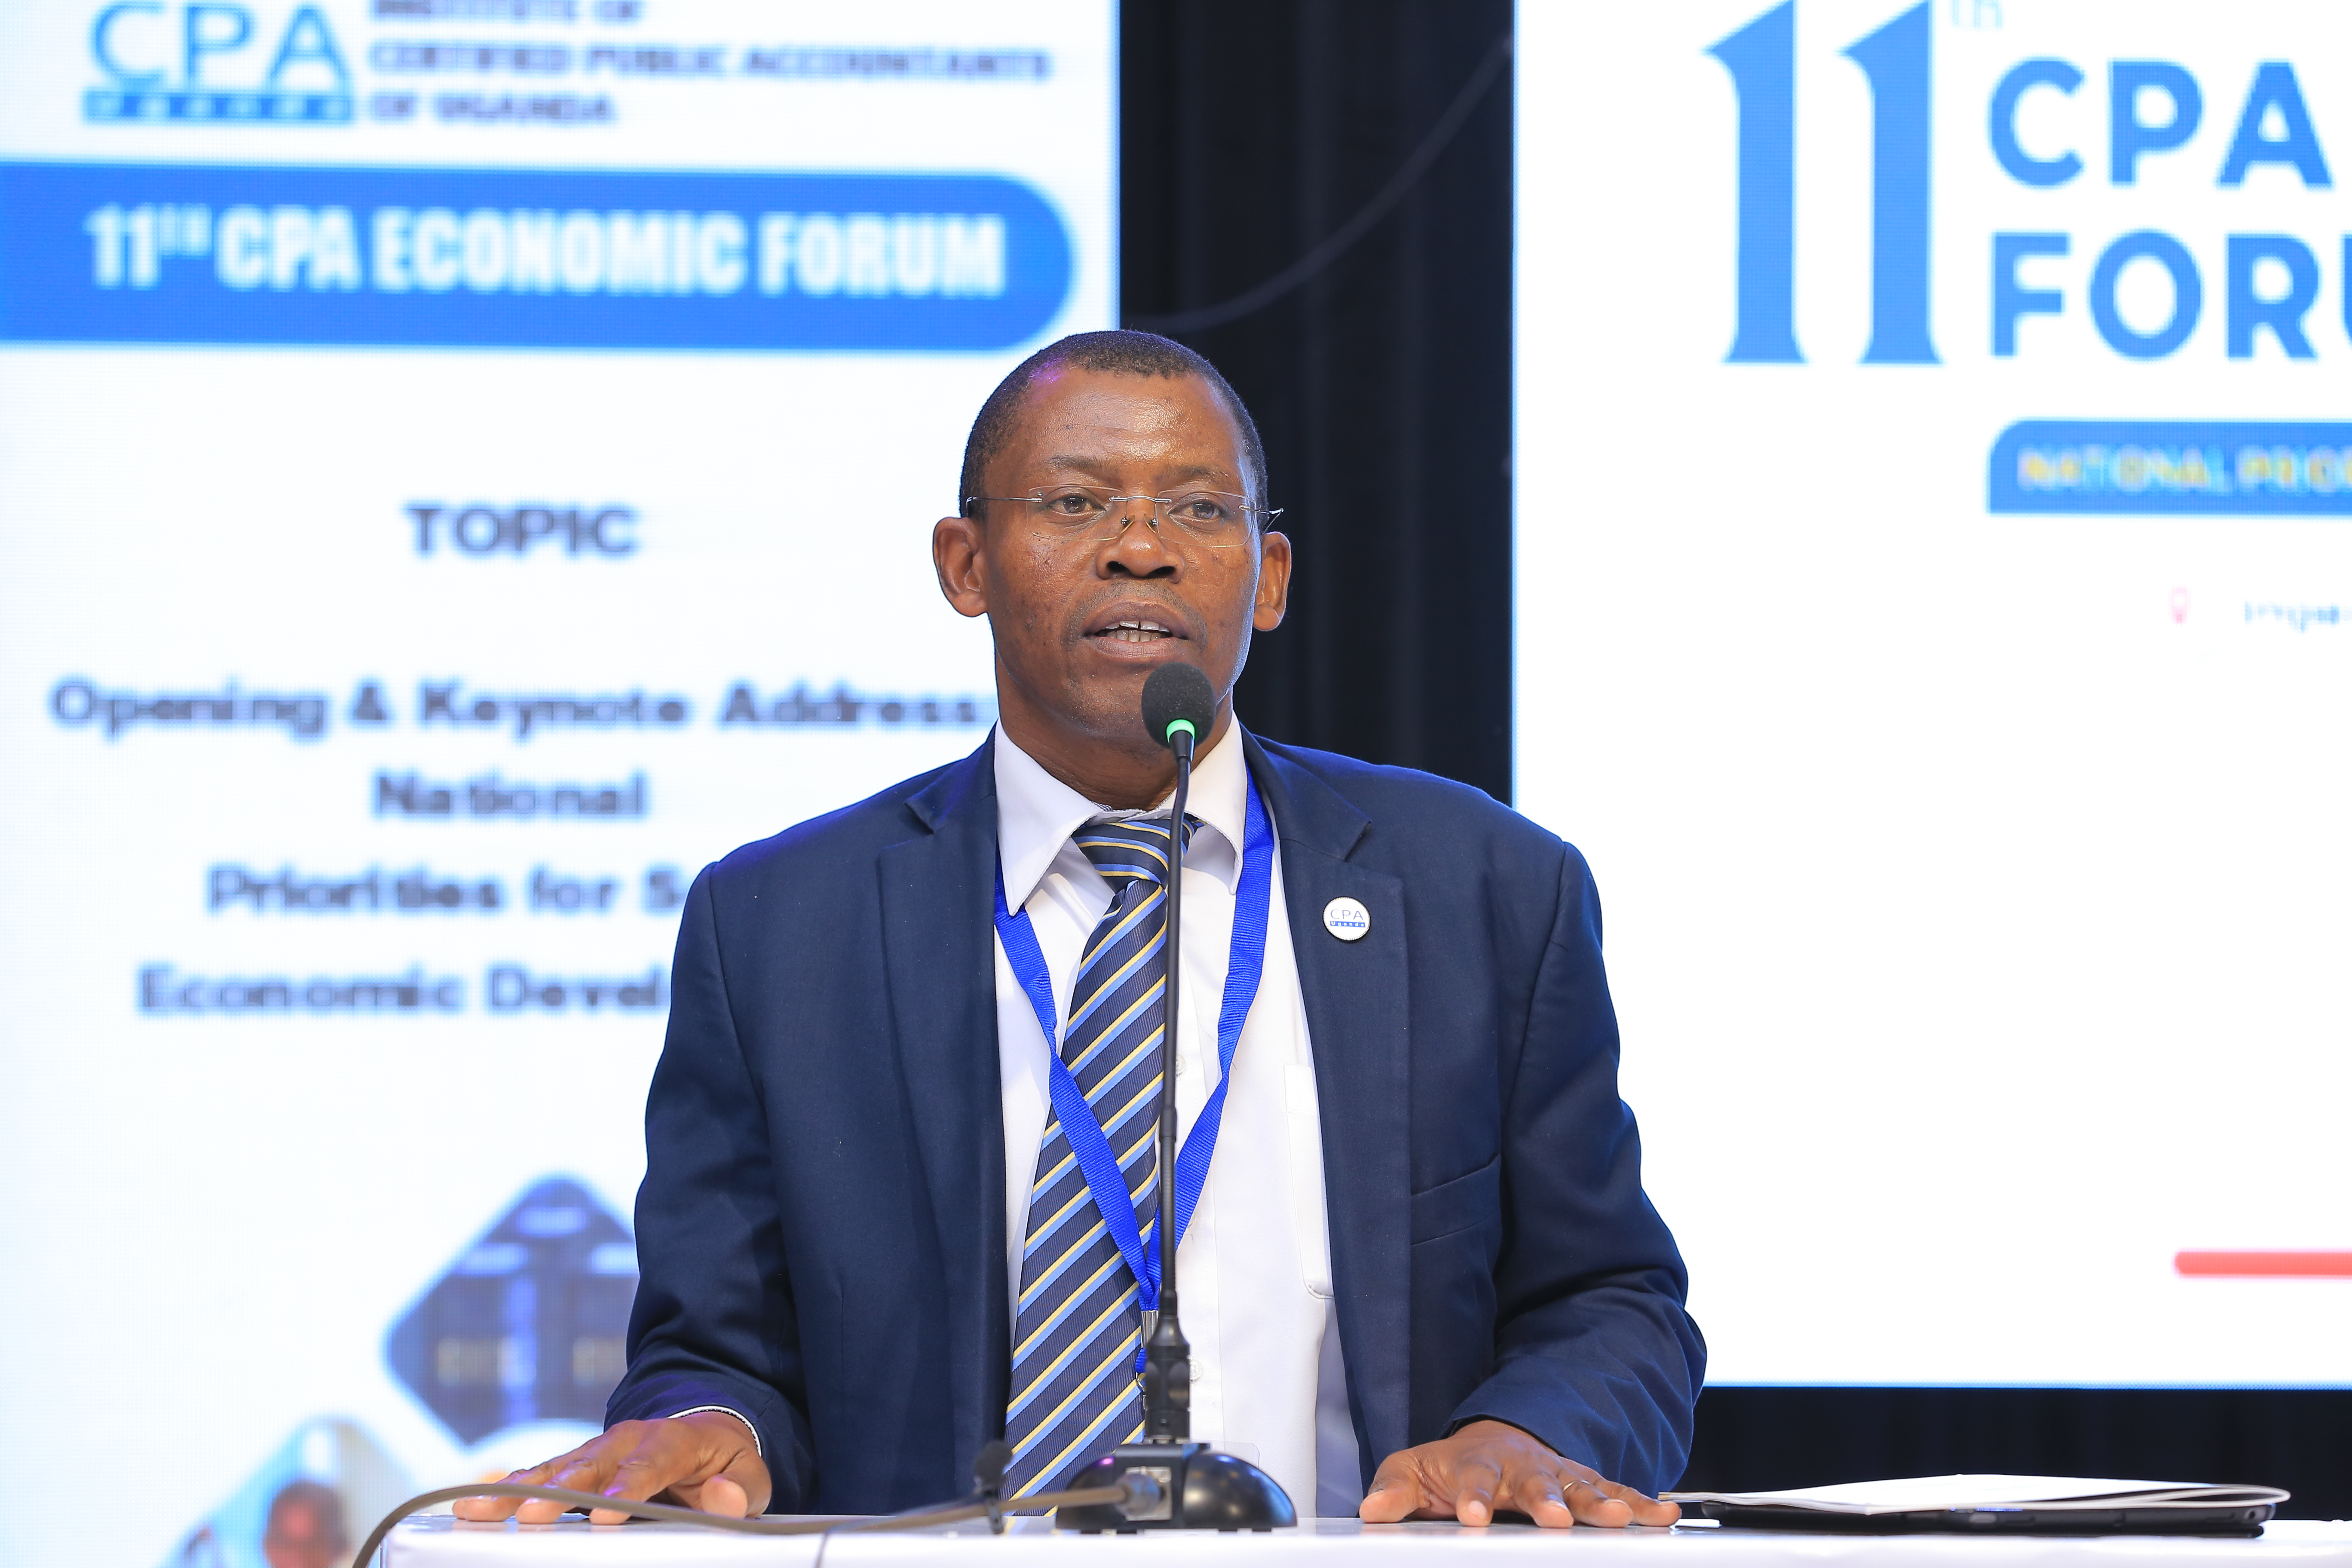 ICPAU Secretary CPA Derick Nkajja giving Welcome remarks at the 11th CPA Economic Forum